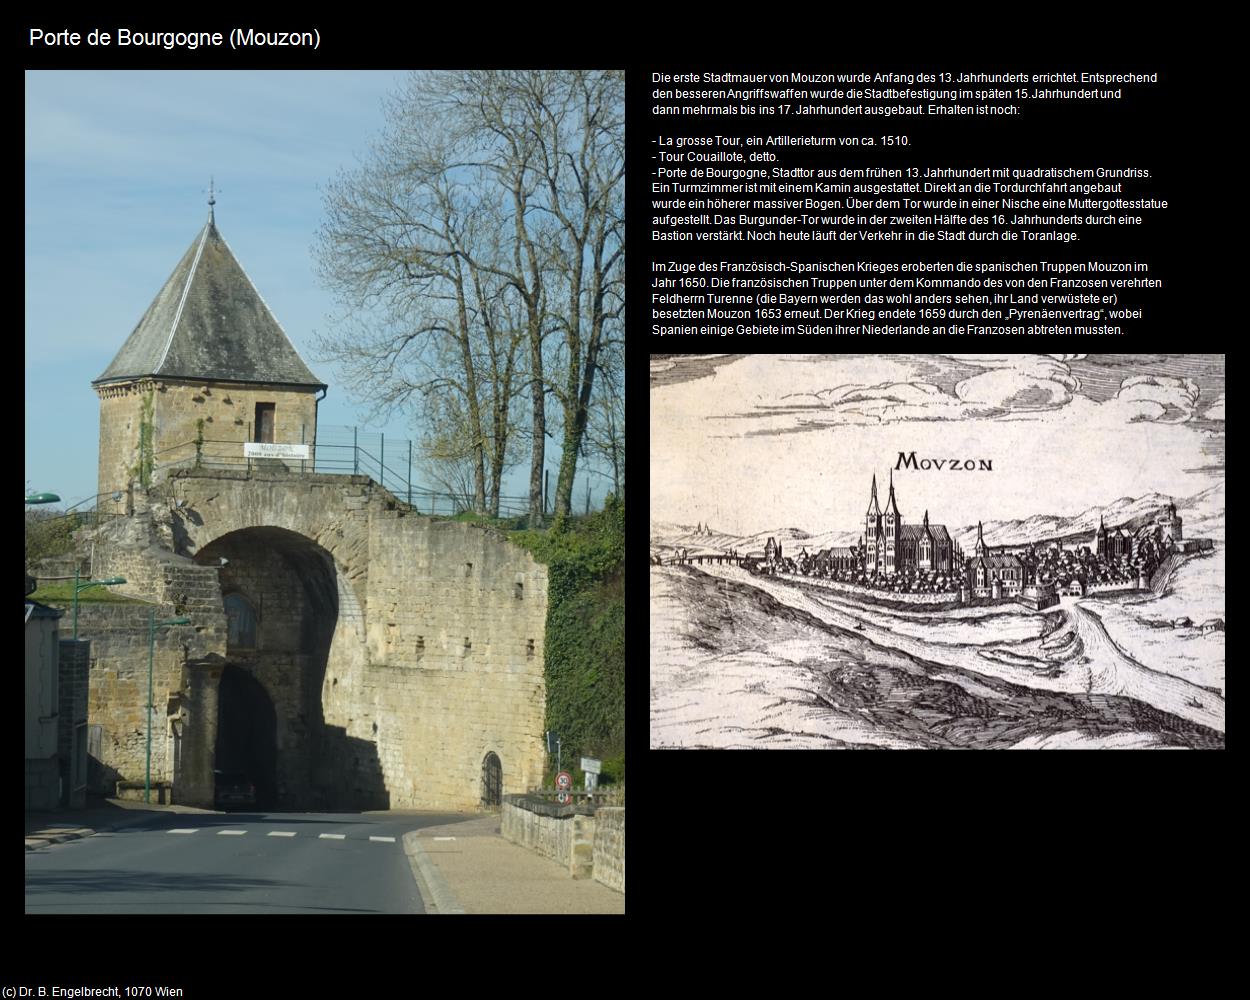 Porte de Bourgogne (Mouzon (FR-GES)) in Kulturatlas-FRANKREICH